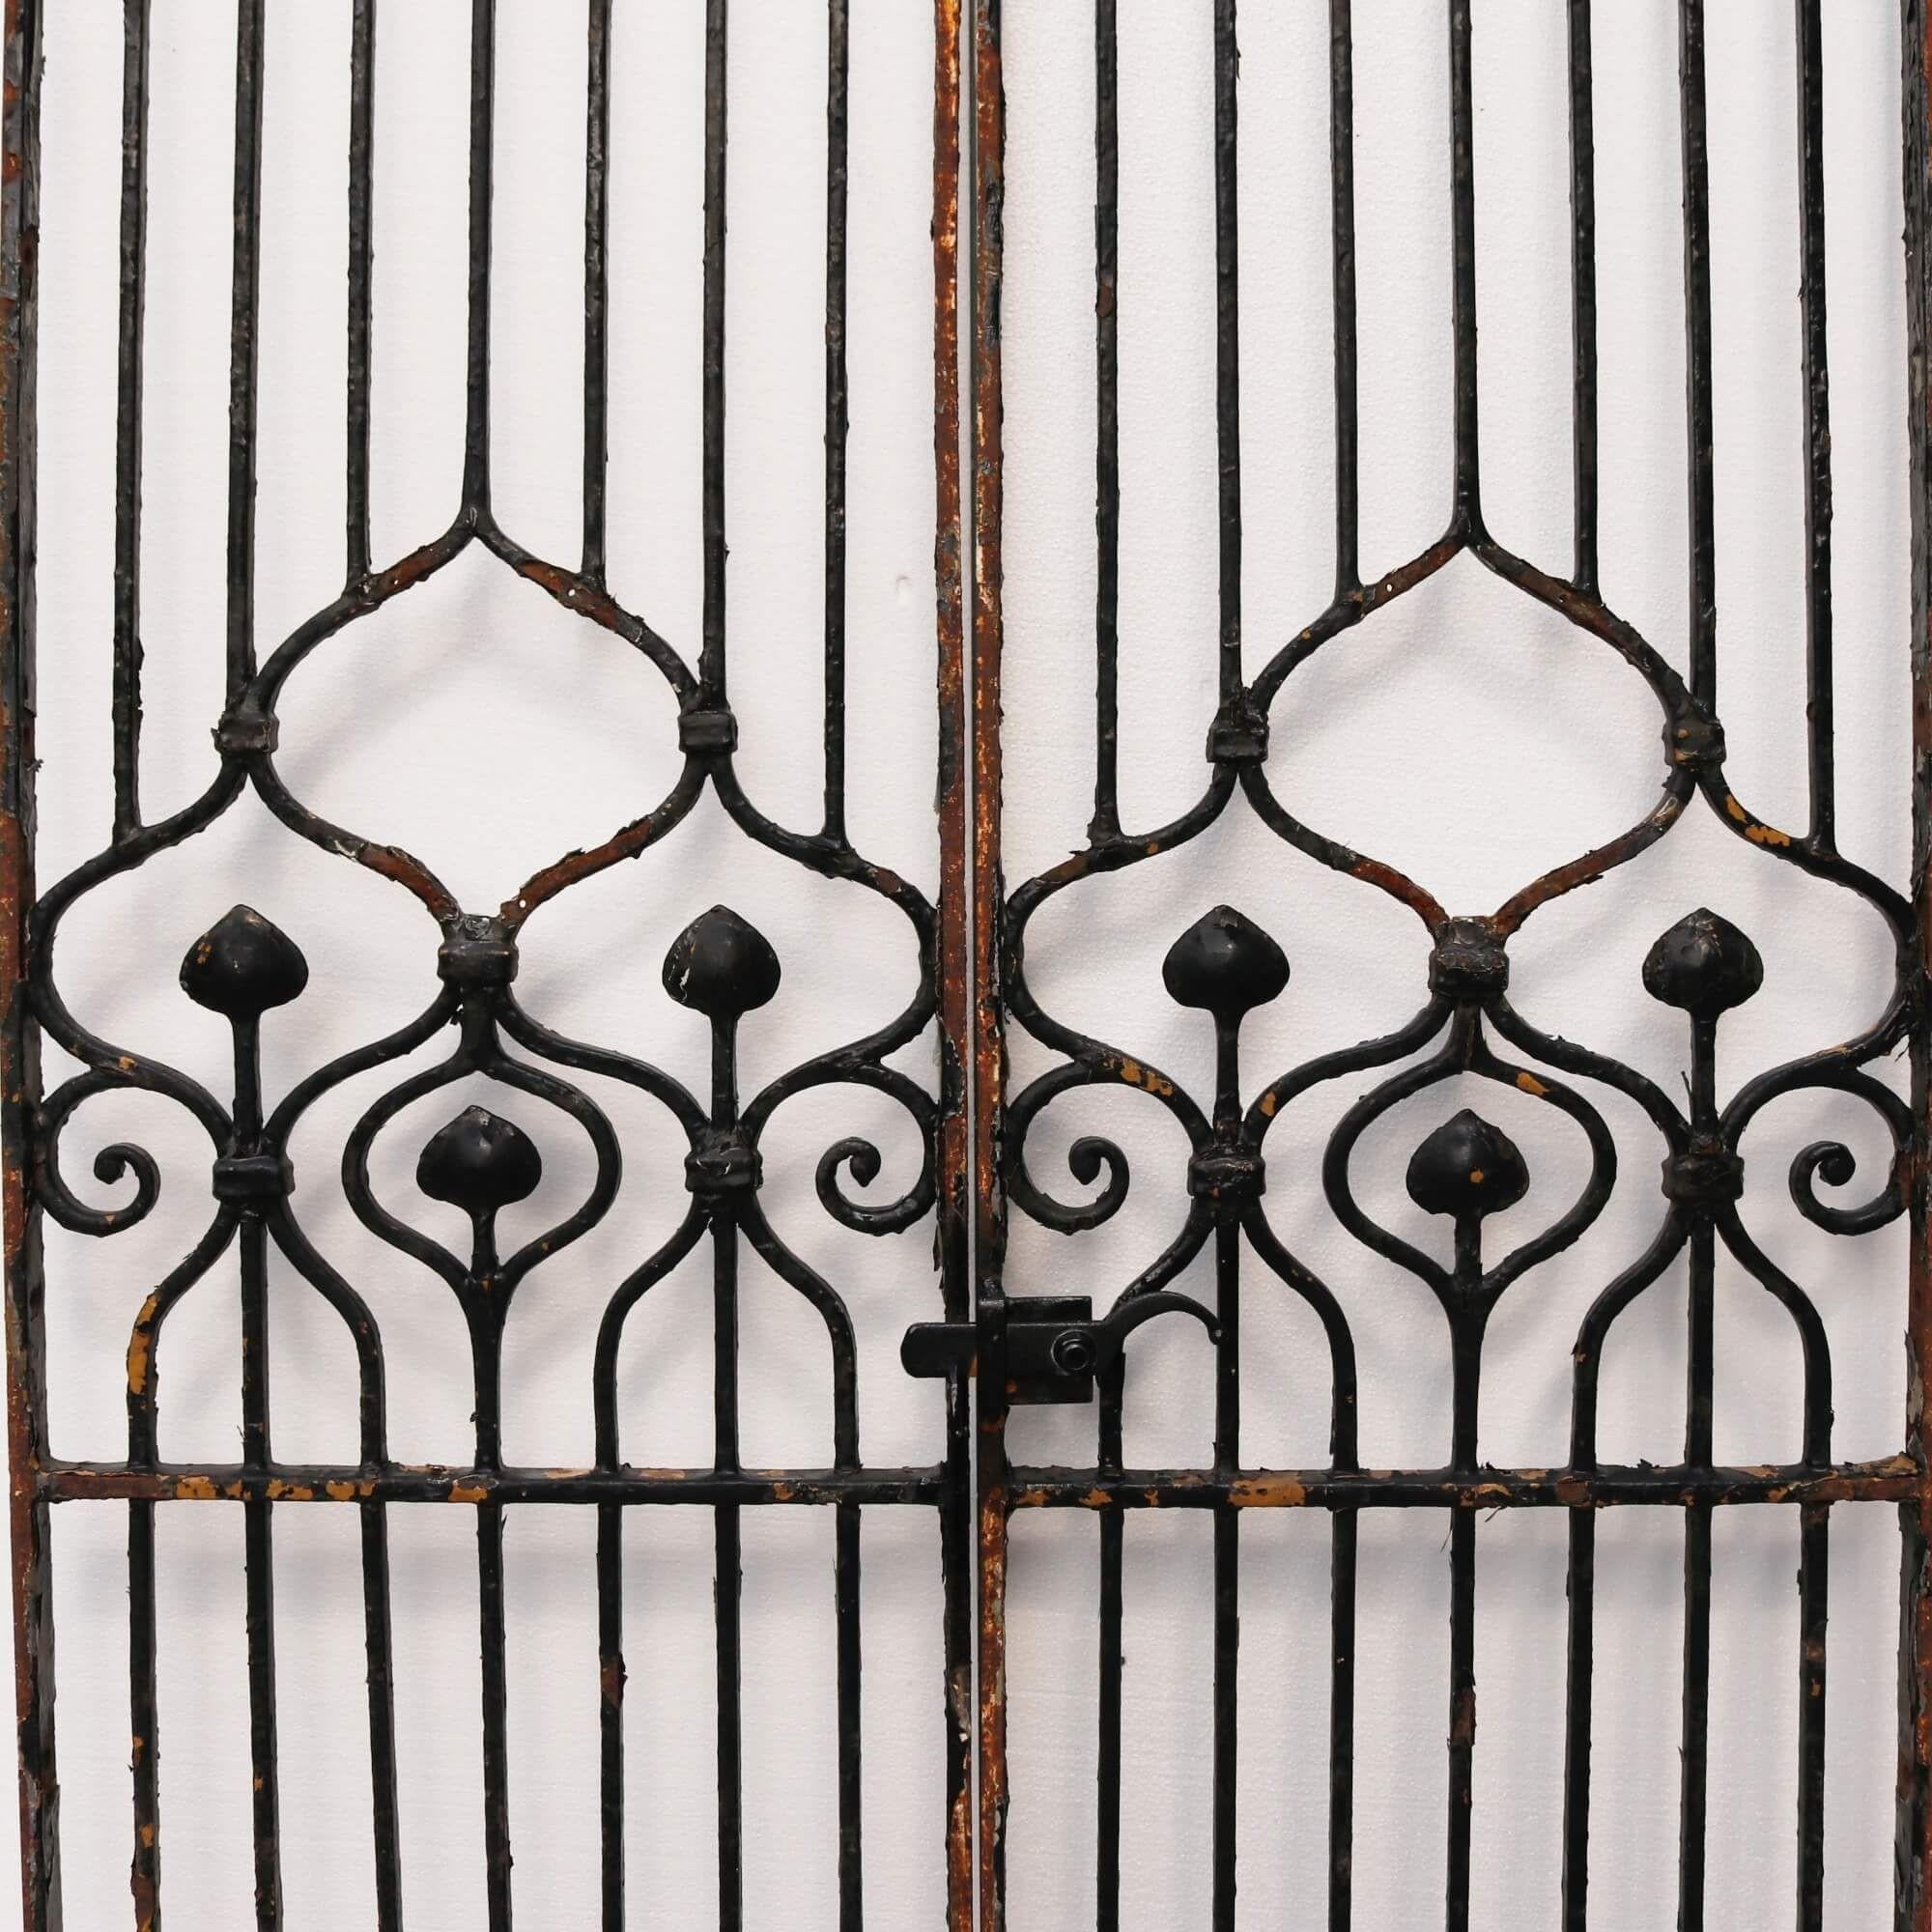 English Set of Tall Art Nouveau Wrought Iron Gates For Sale